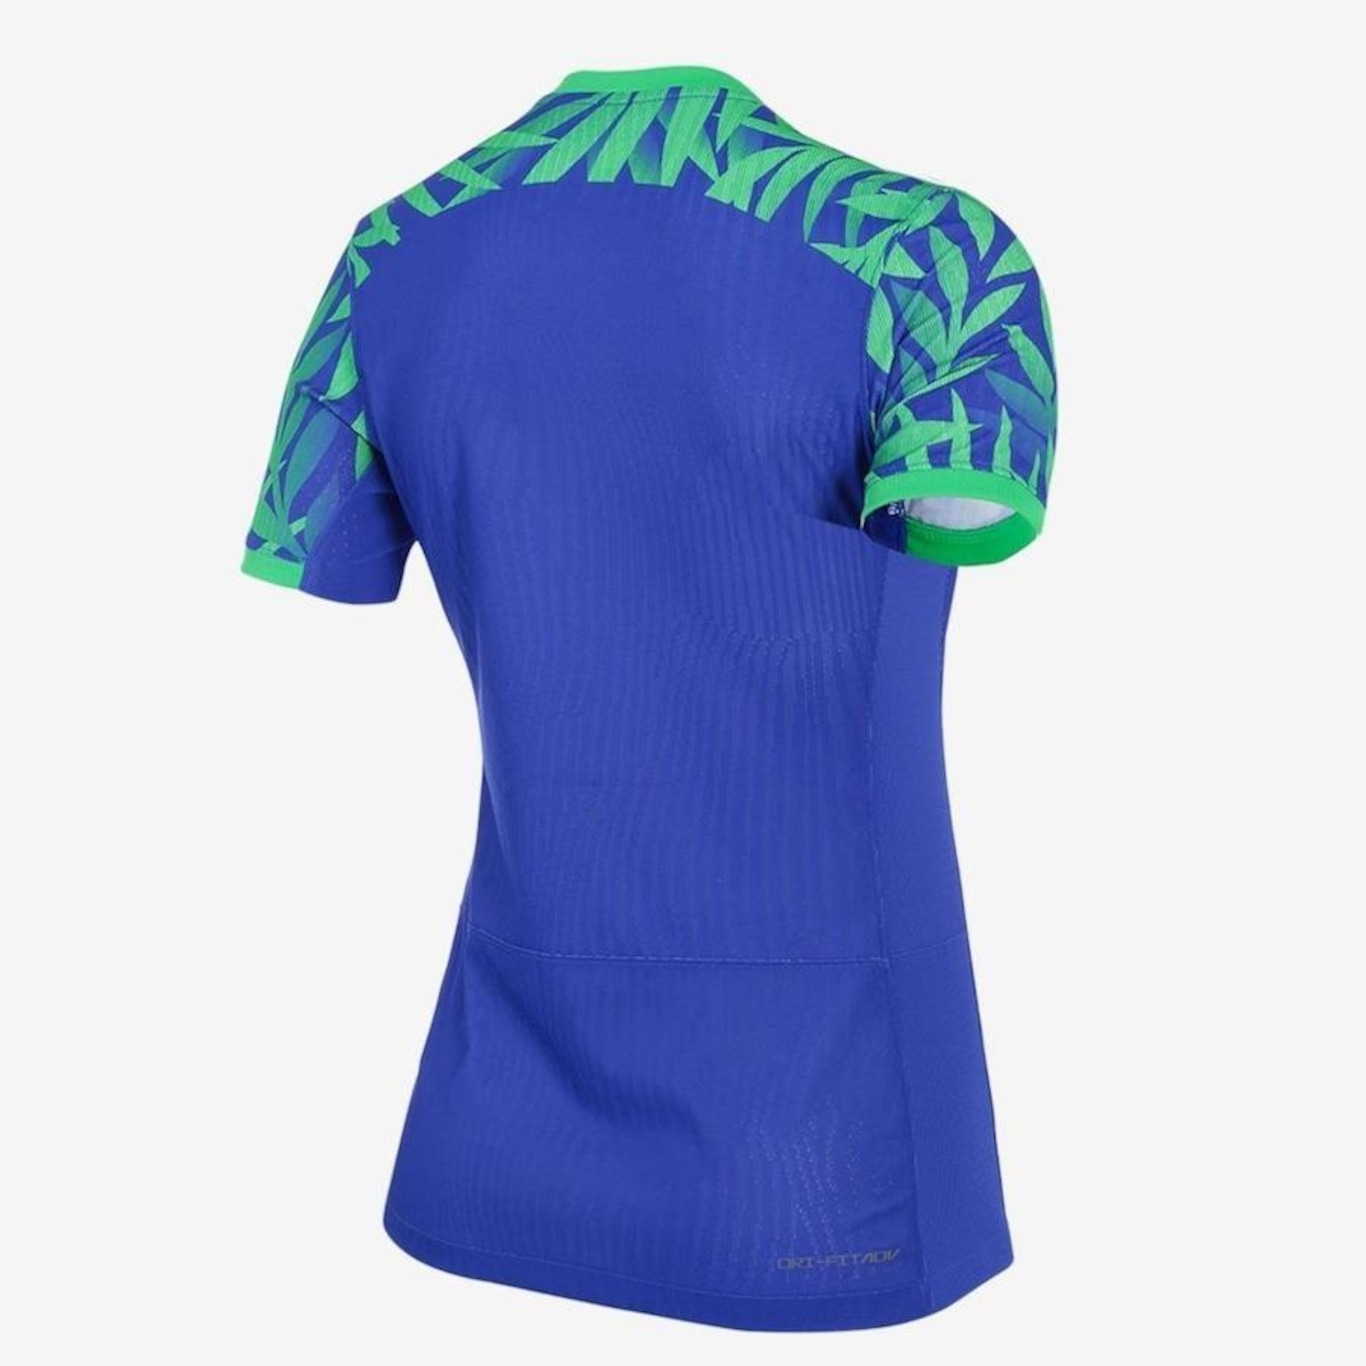 Camisa Nike Brasil II 2020/21 Torcedora Pro Seleção Feminina em